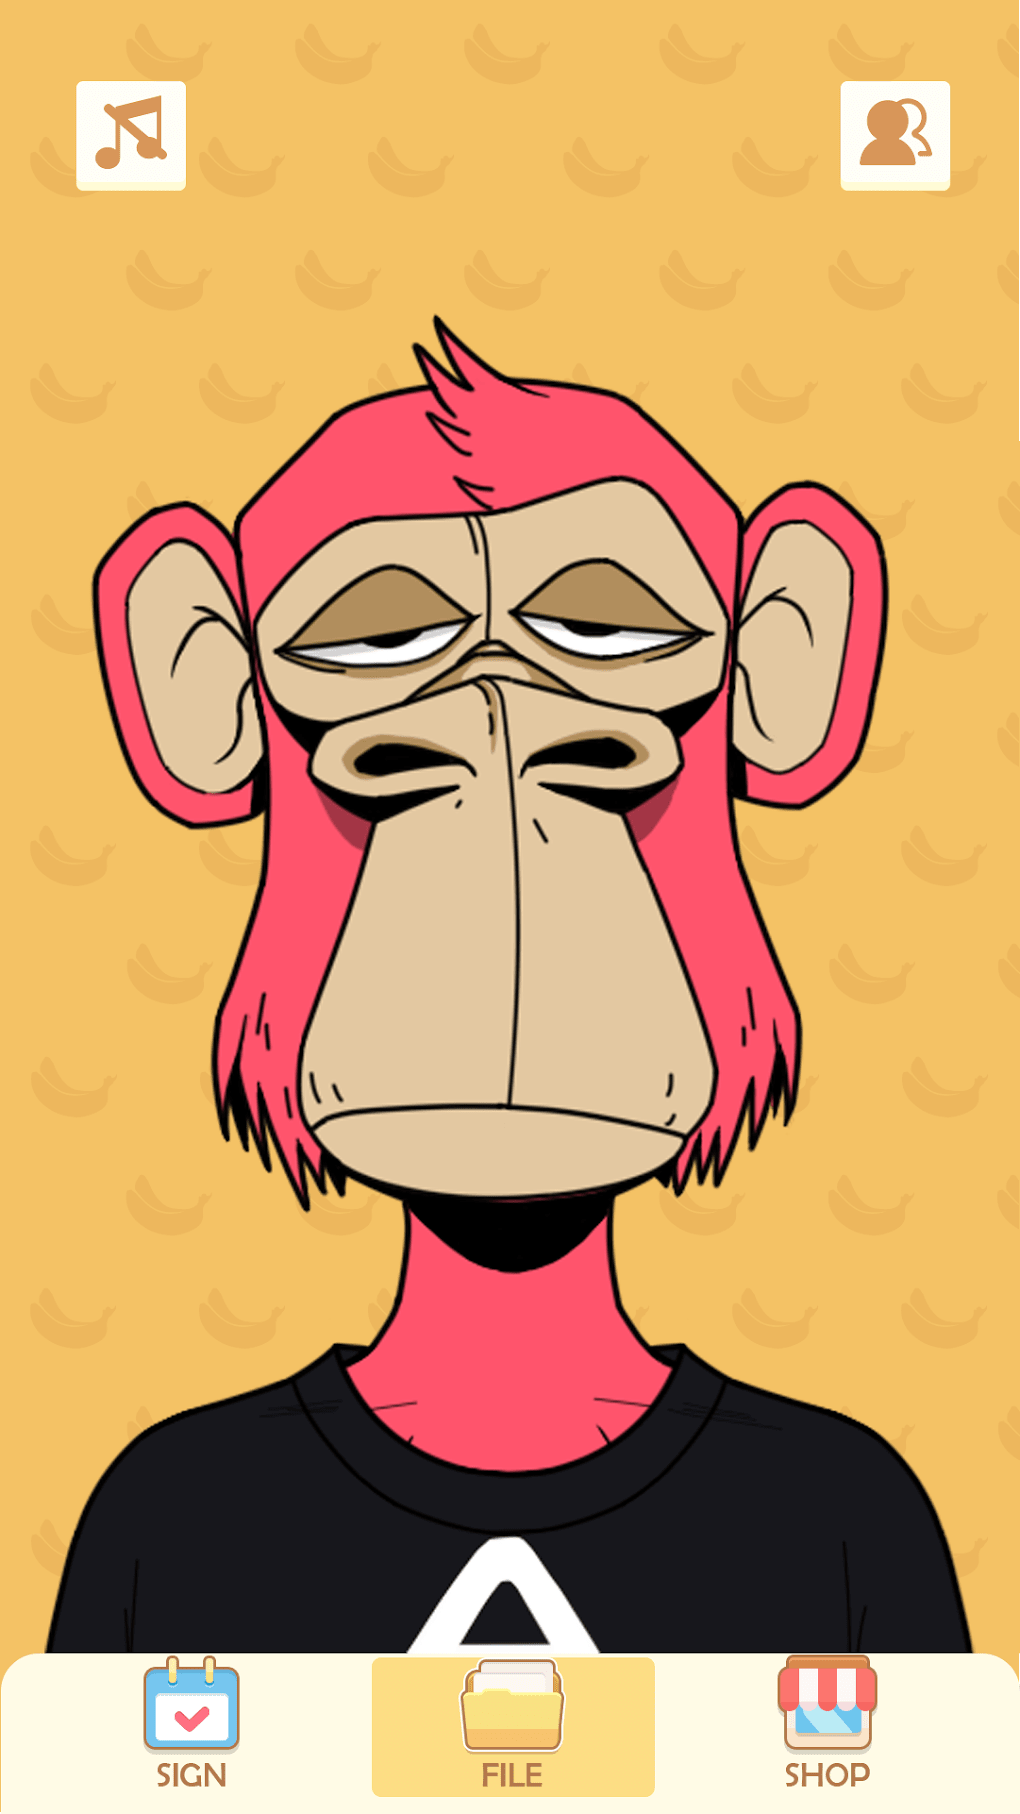 Bored Ape Creator - NFT Art - Make Your Own Bored Ape